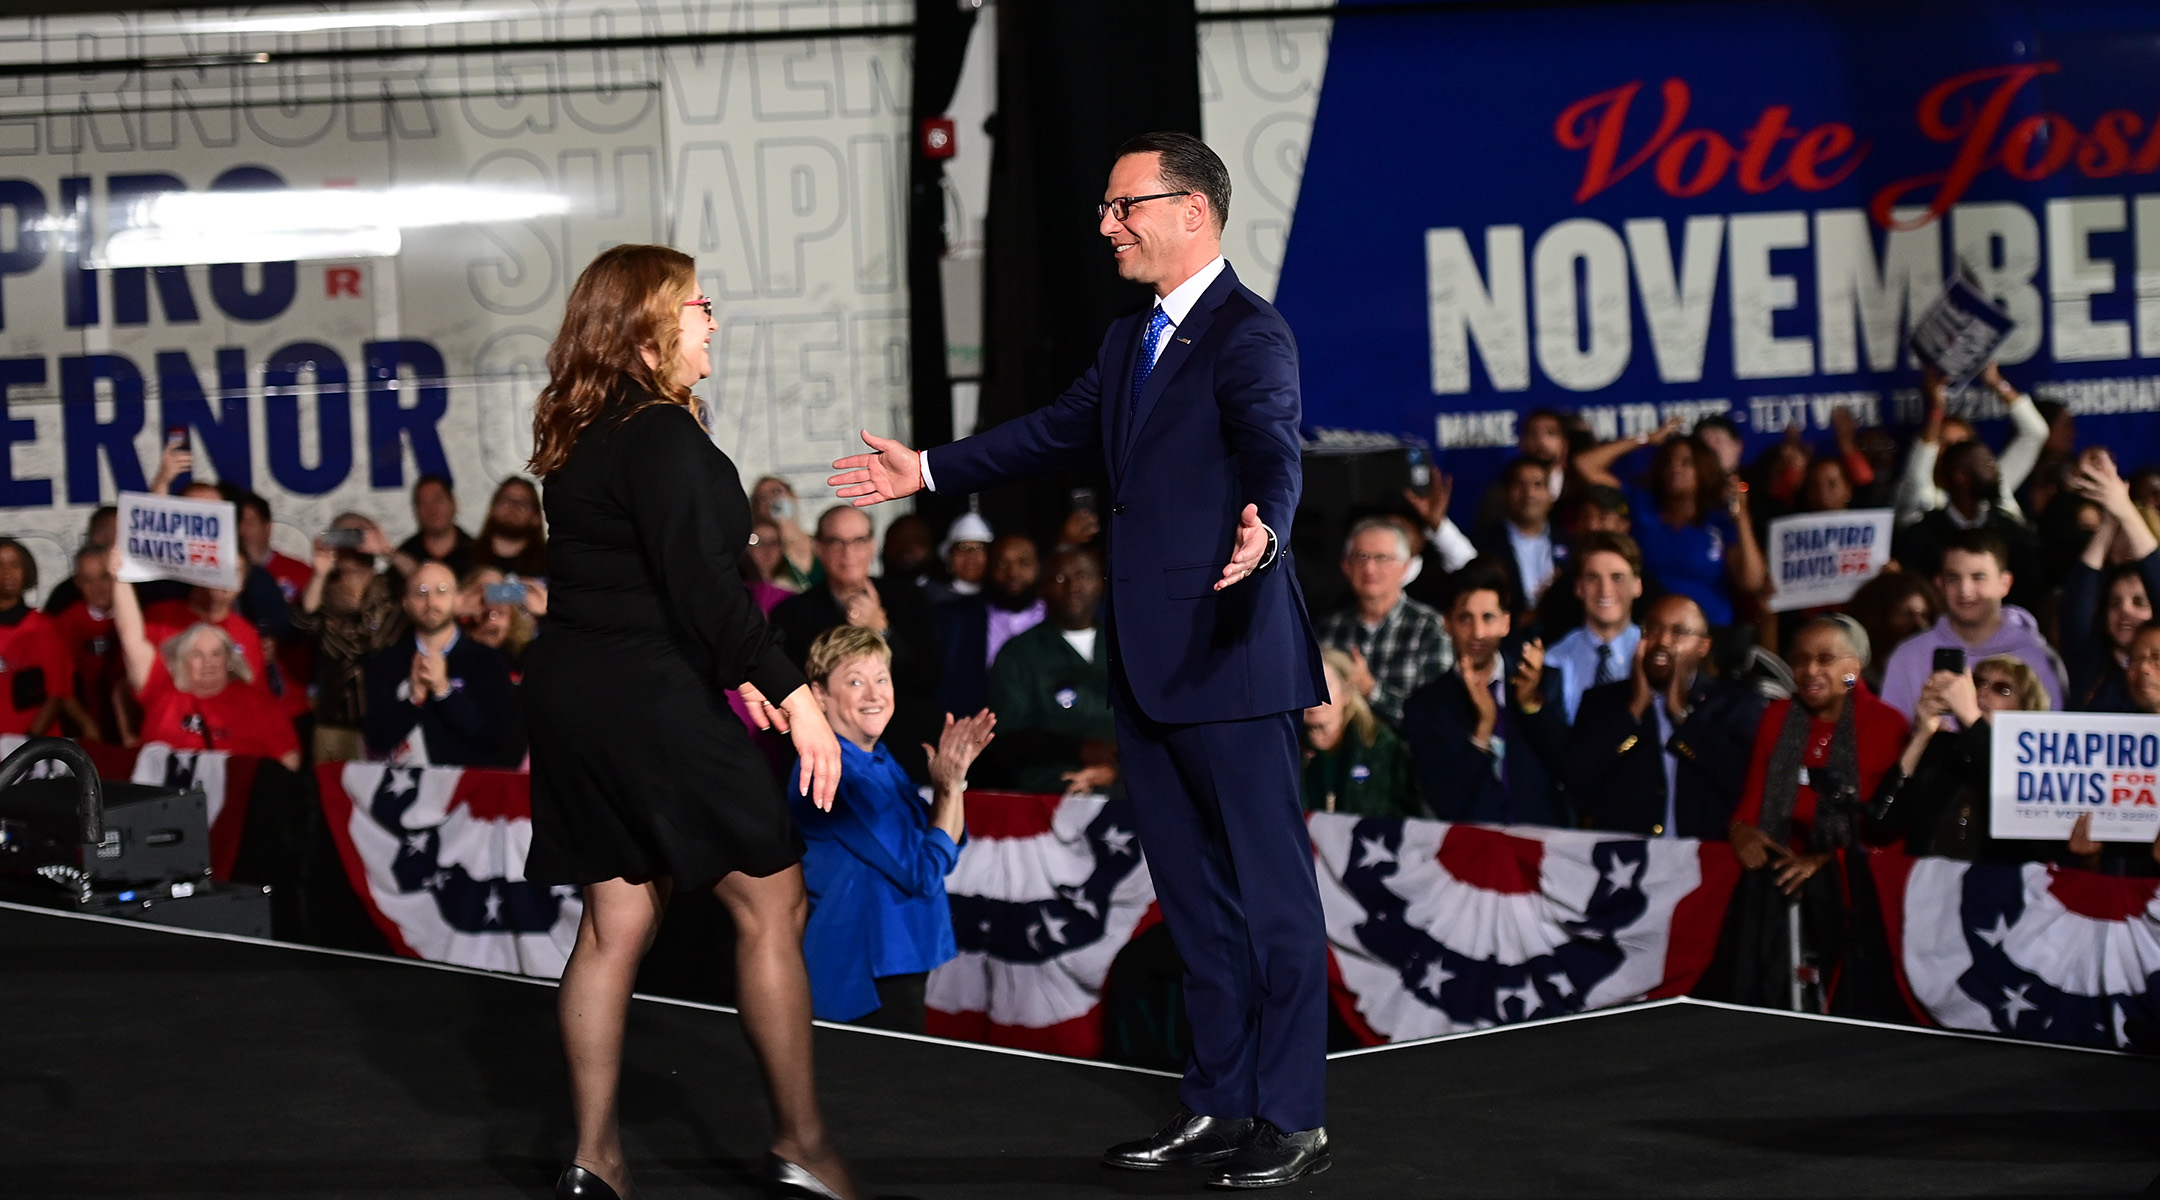 Democratic gubernatorial nominee Josh Shapiro greets his wife, Lori Shapiro, during an election night event in Philadelphia, Nov. 8, 2022. (Mark Makela/Getty Images)